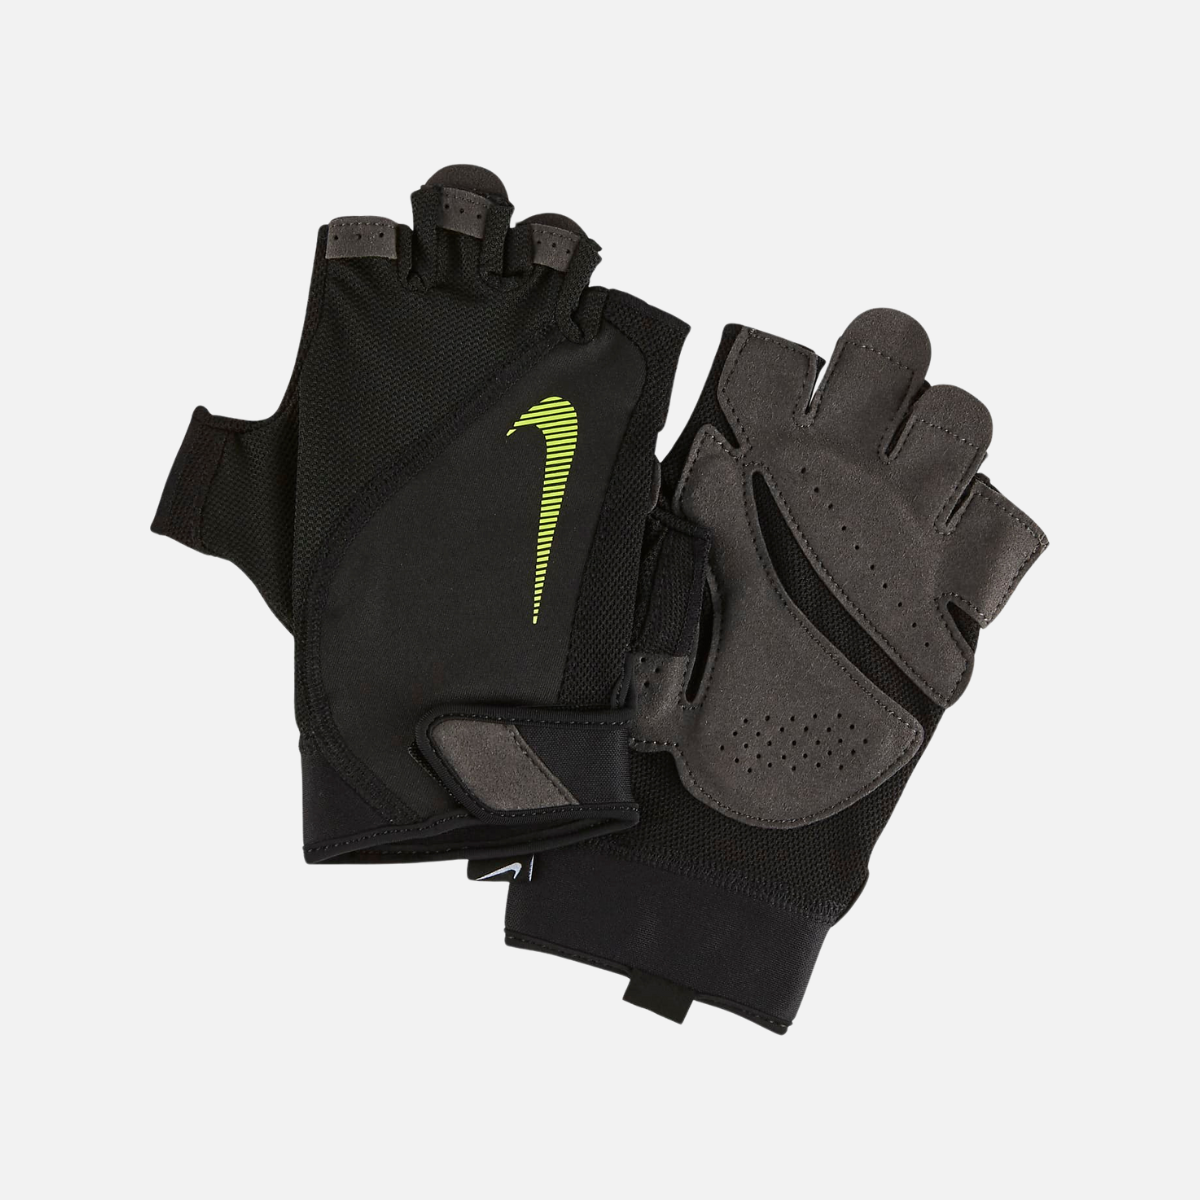 Nike Men's Training Gloves -Black/Dark Grey/Black/Volt